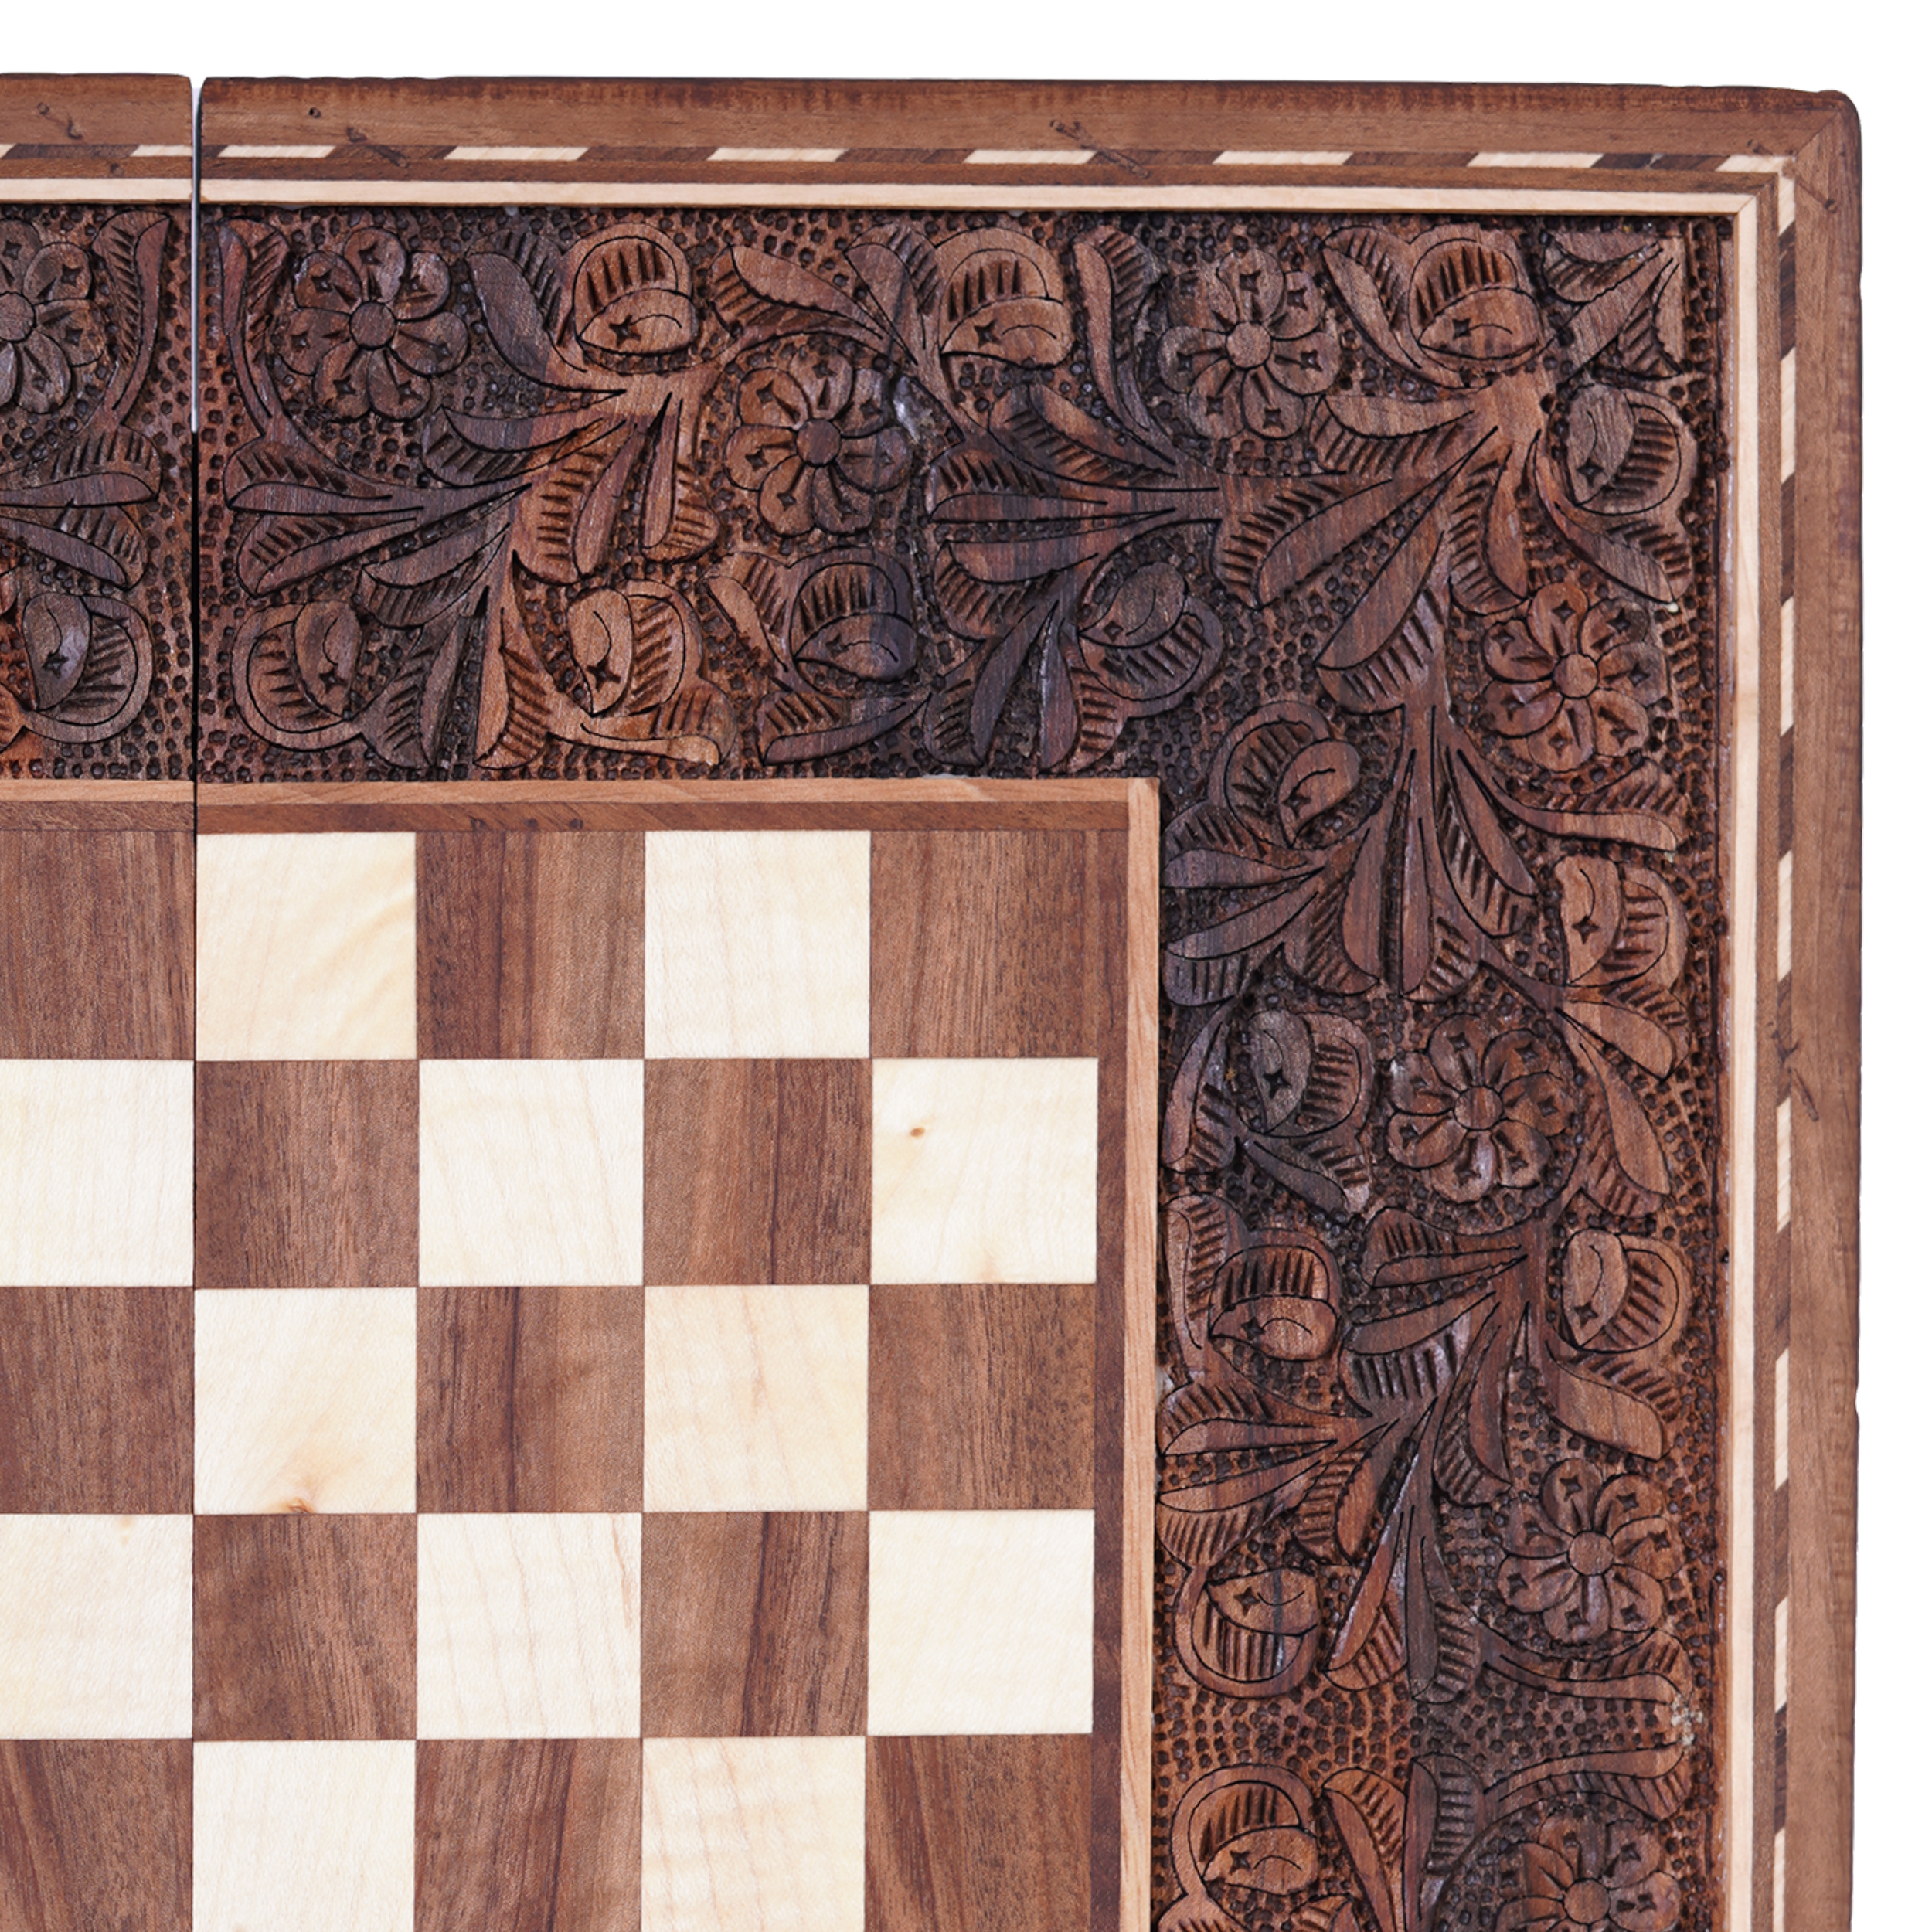 Handmade decorative wood carving chess board, lotus flower model, code 103